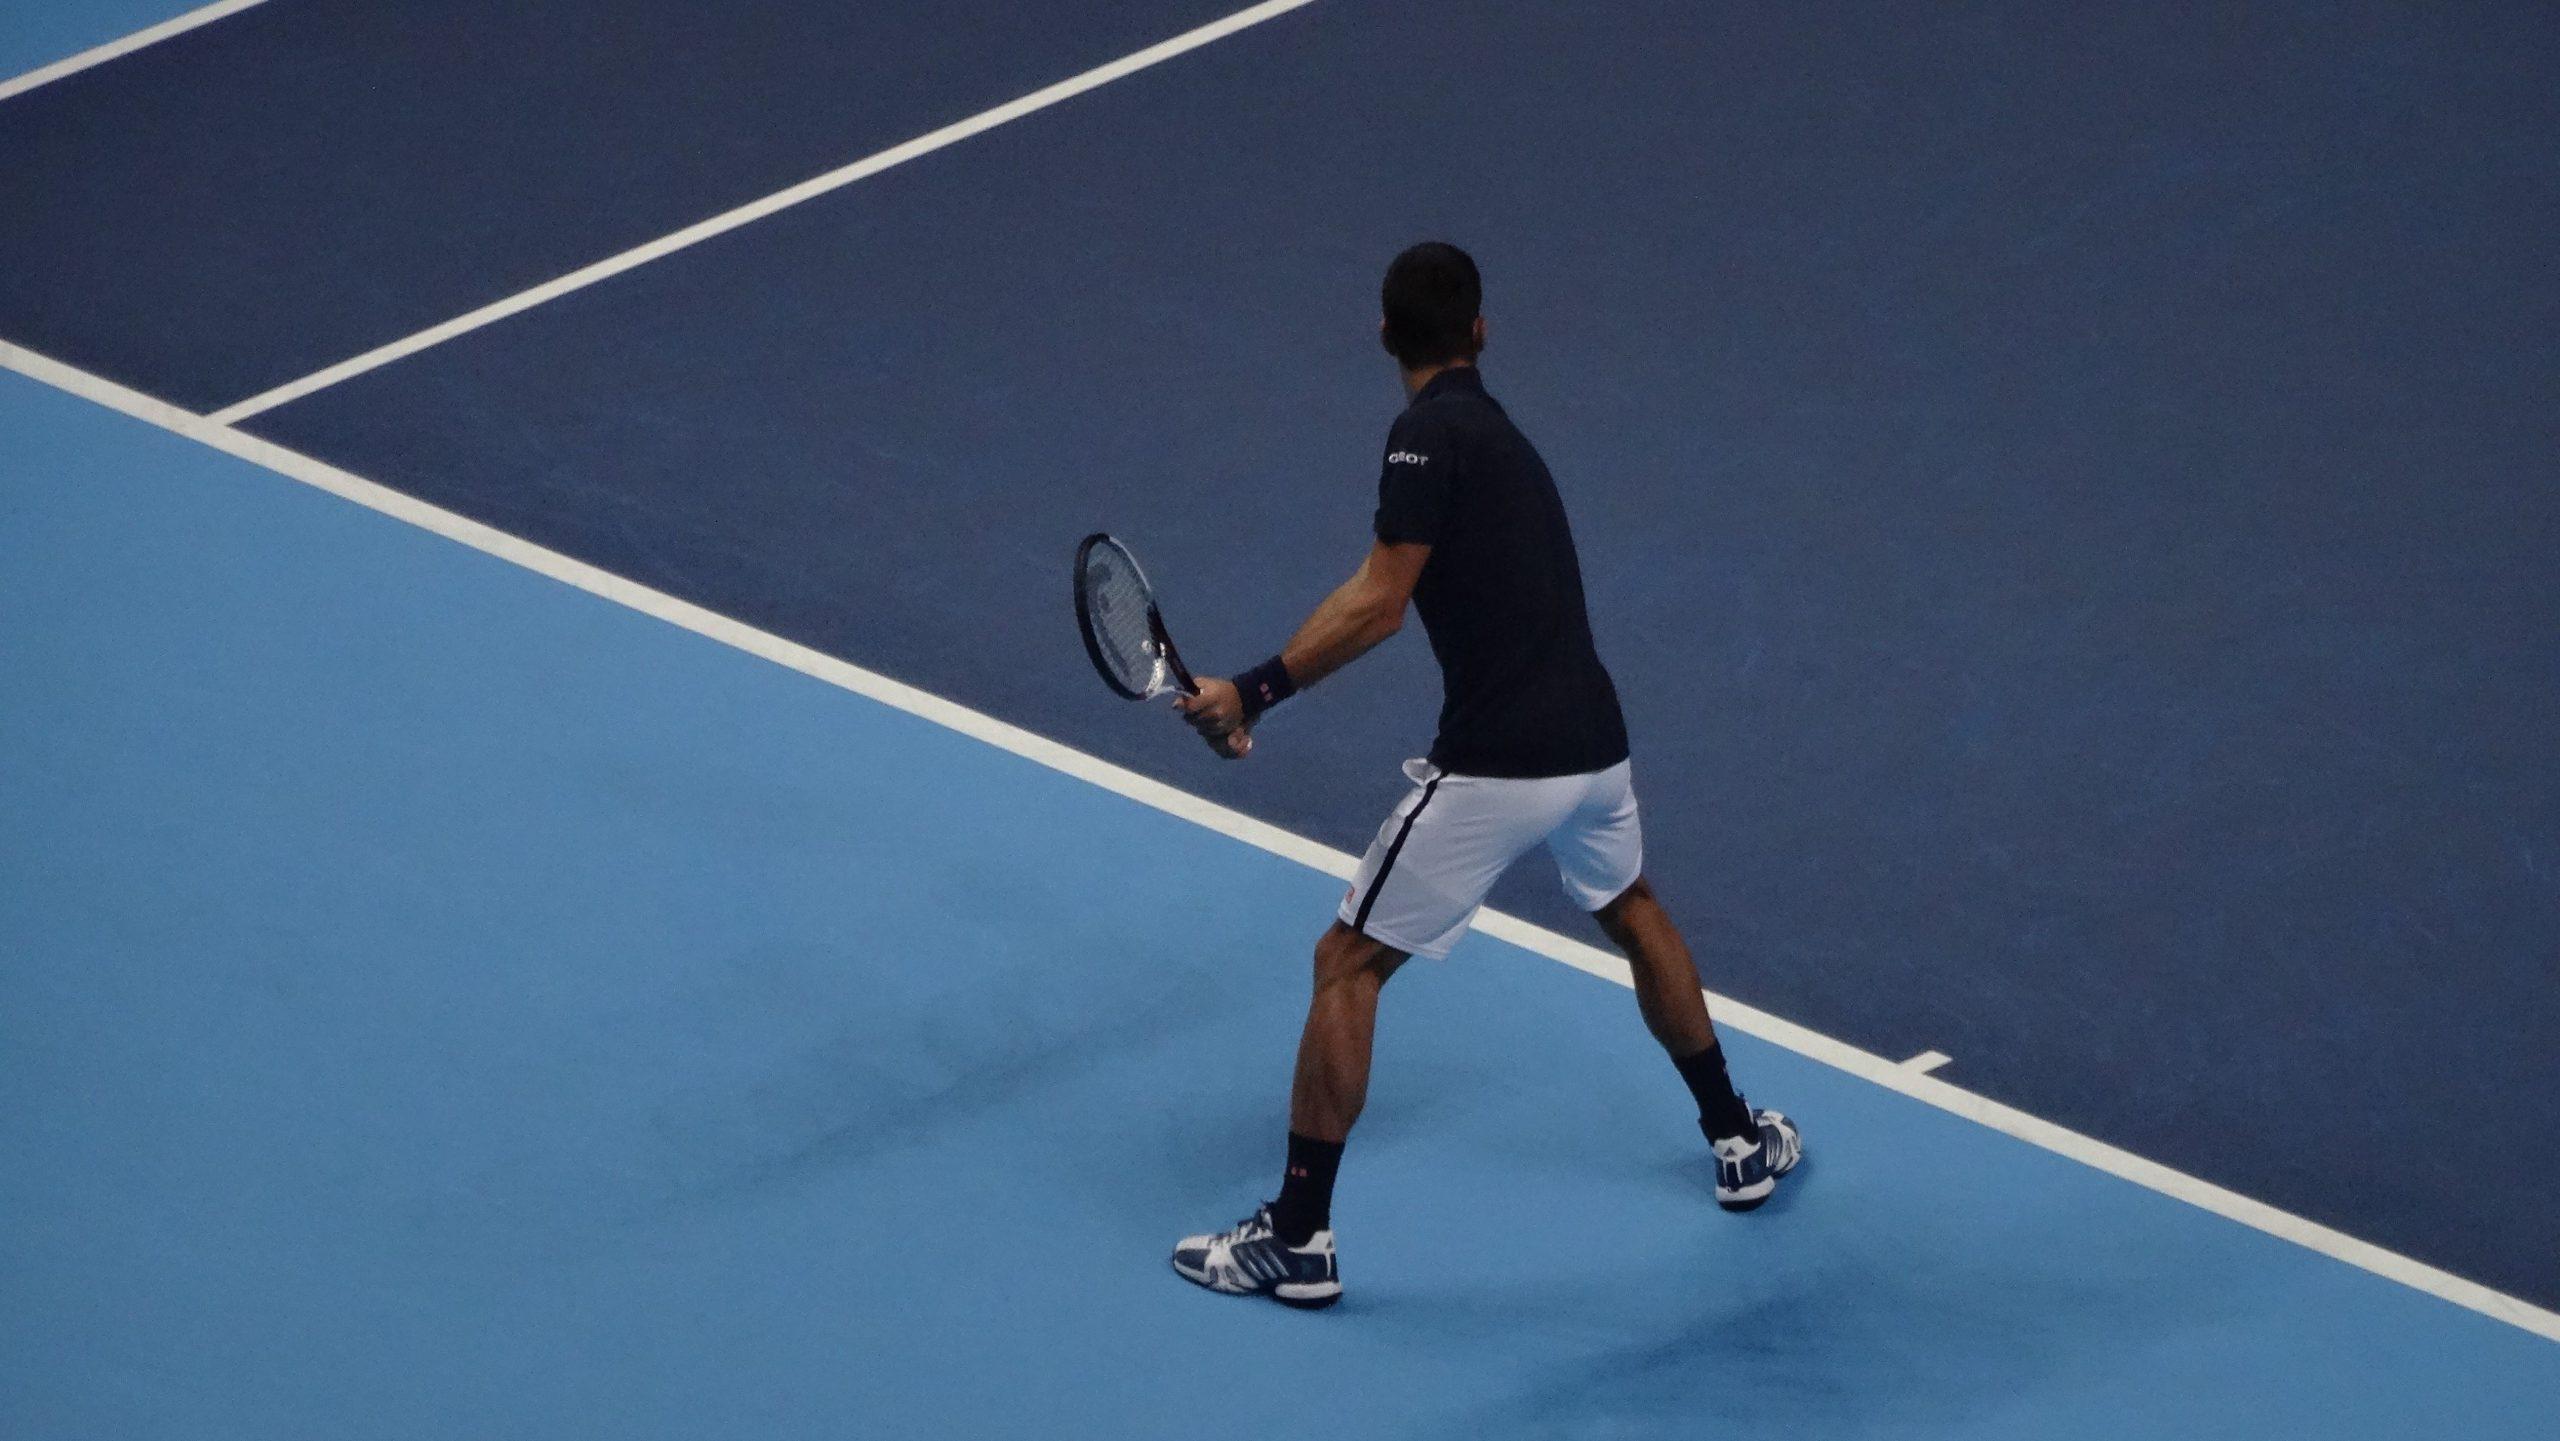 Novak Djokovic looking to return a ball on a tennis court.